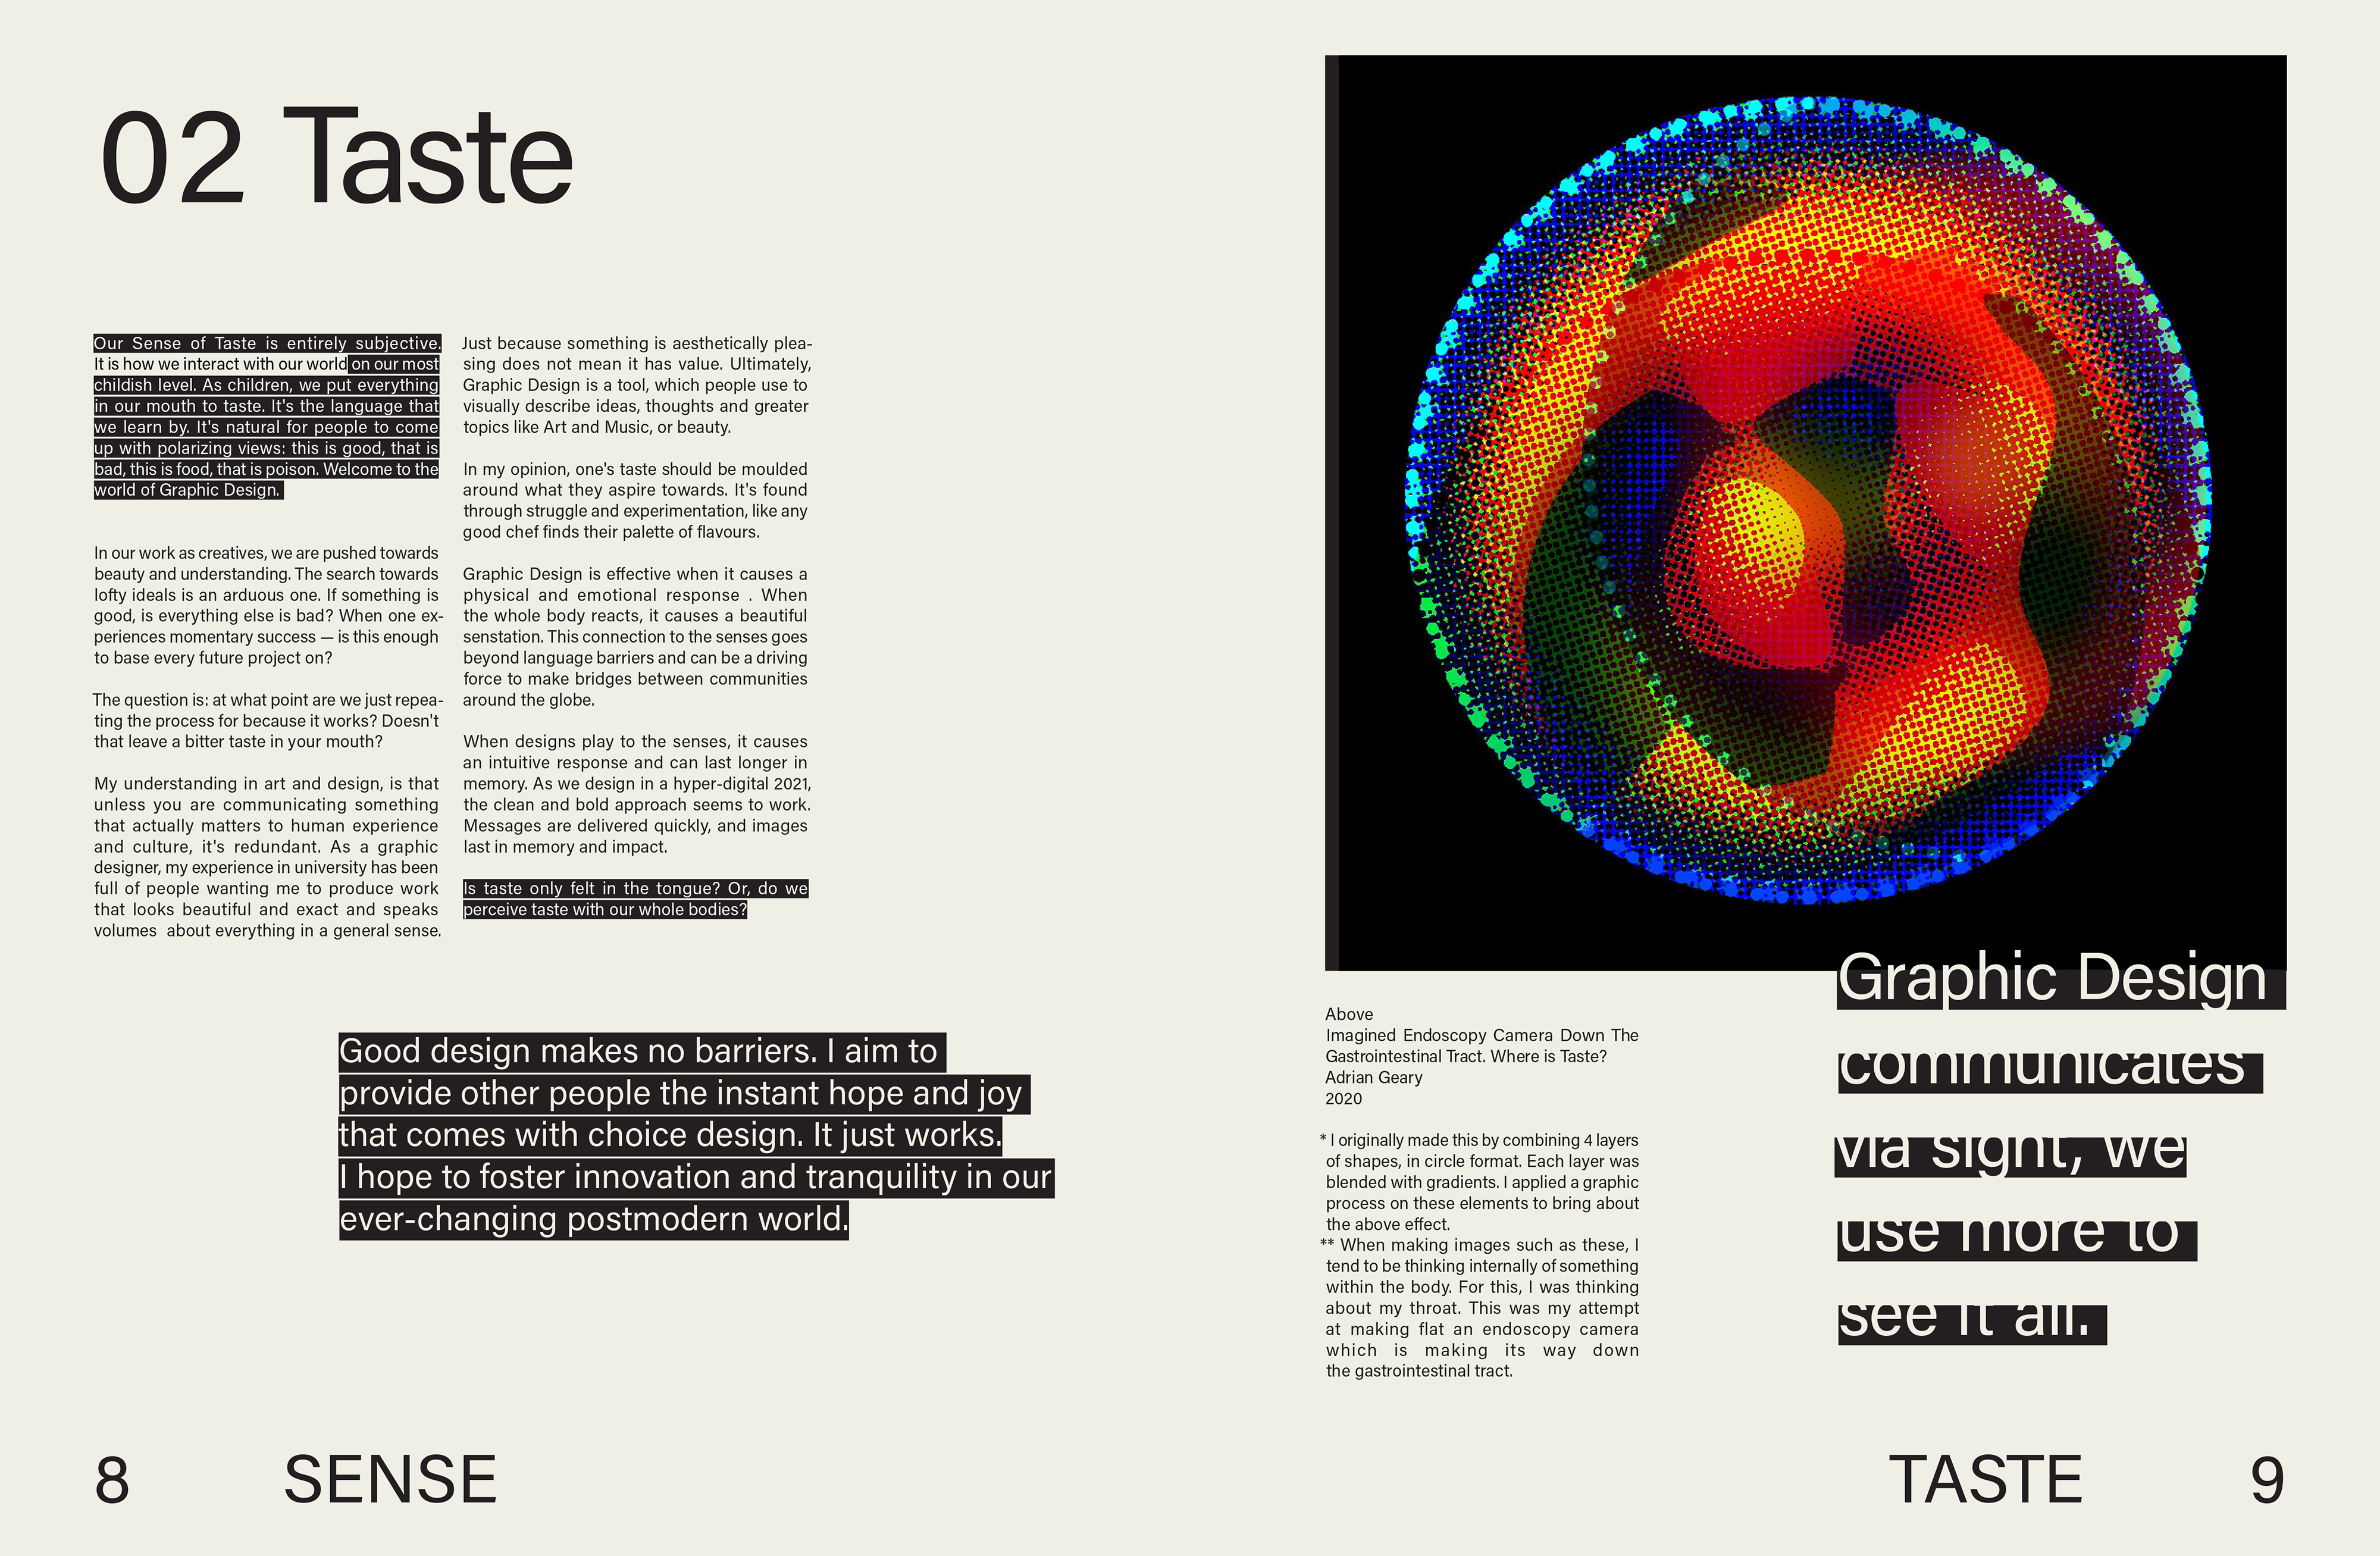 02 Taste — Object / Sense